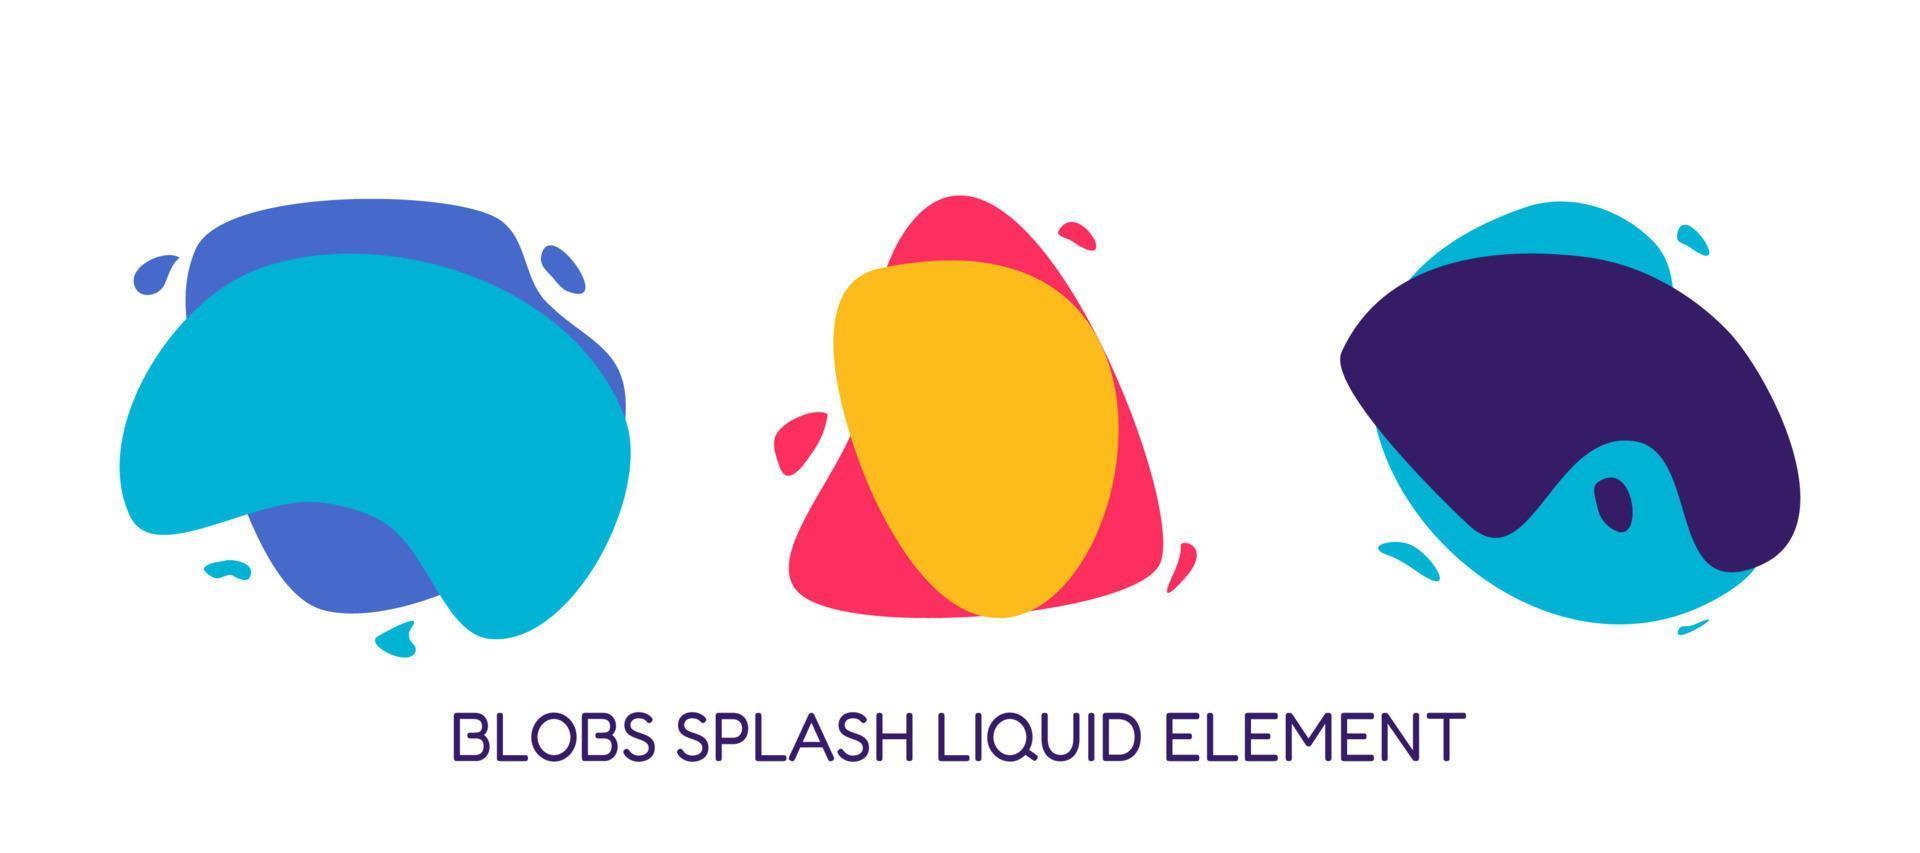 Blobs splash liquid collection vector. vector